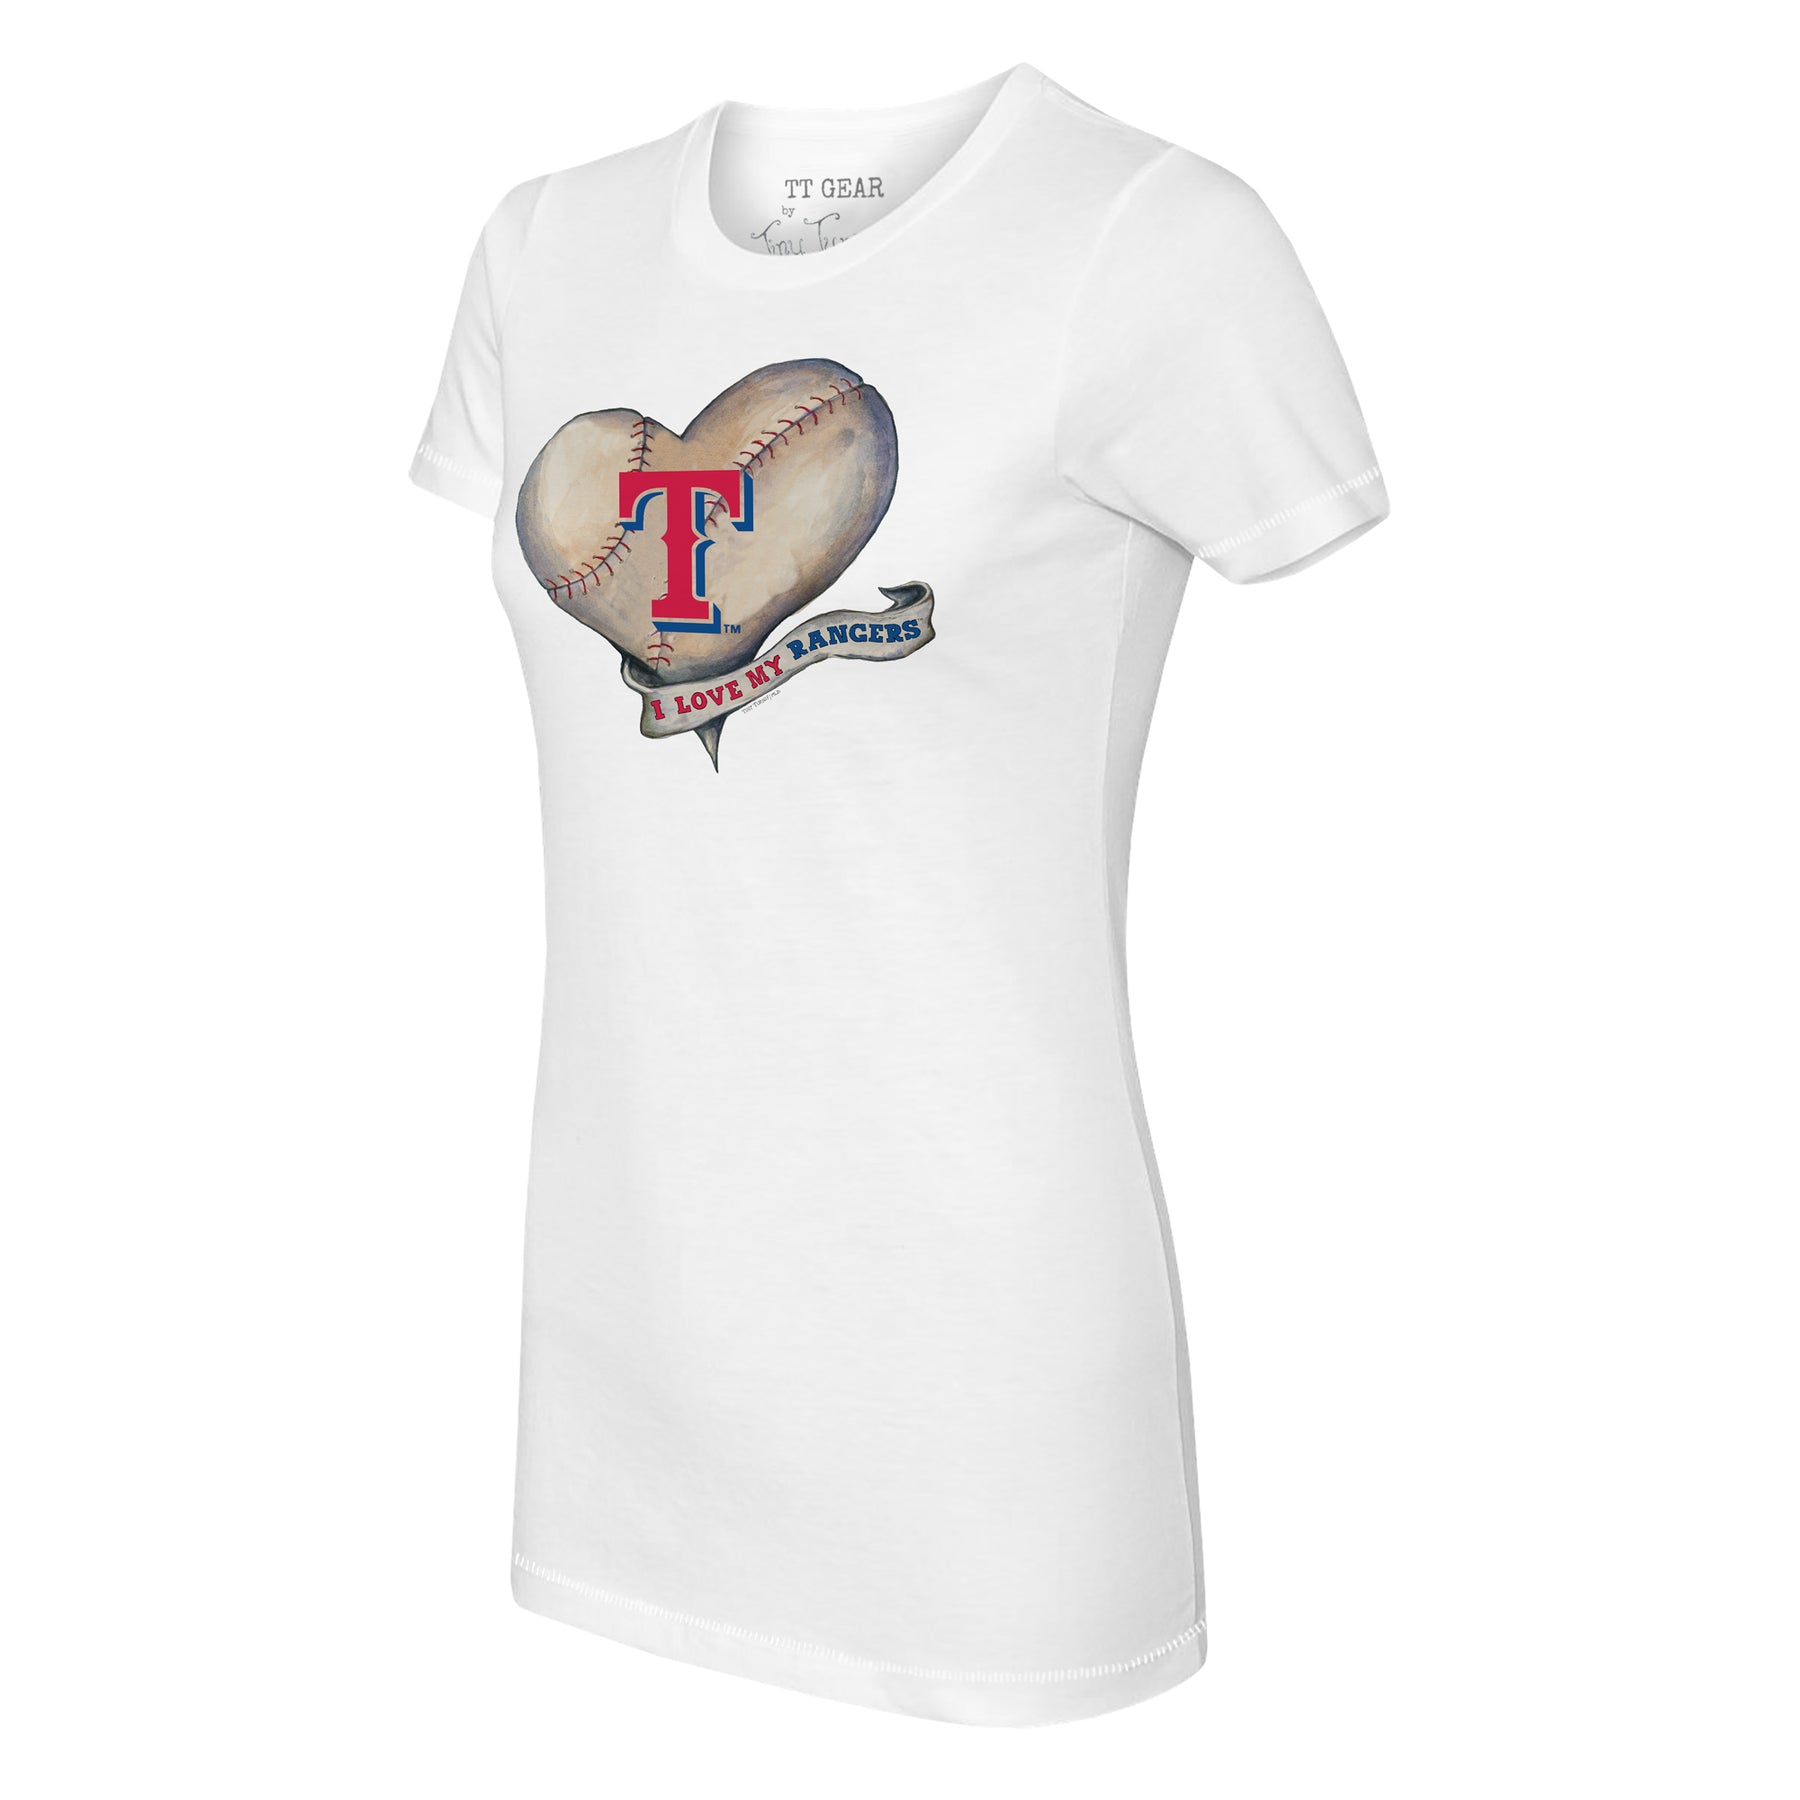 Texas Rangers Baseball LOVE Tee Shirt